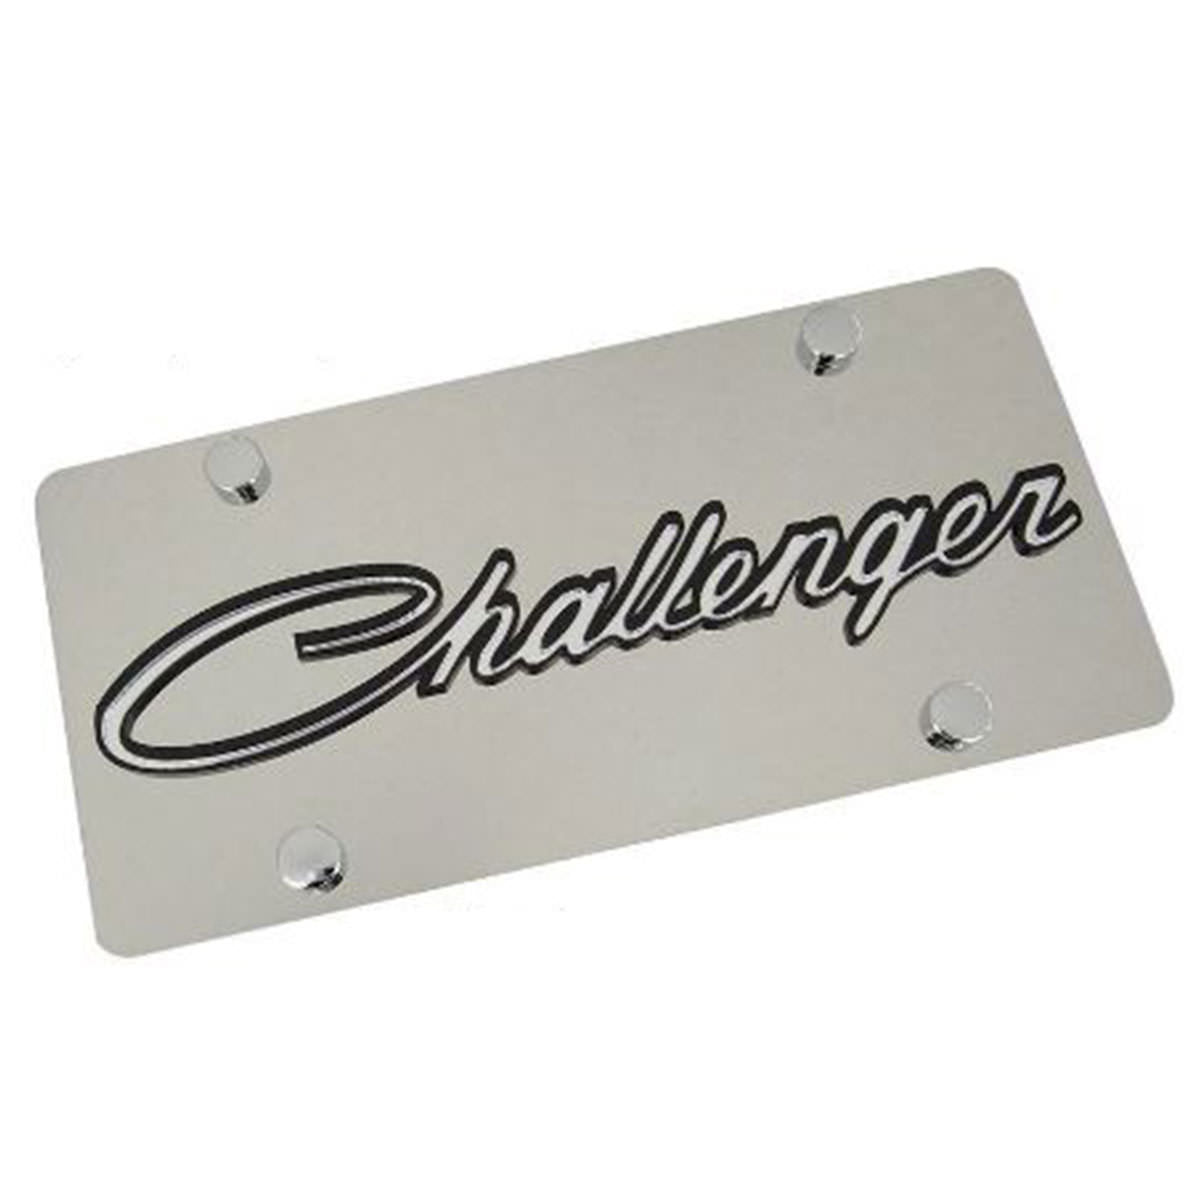 Dodge Challenger License Plate